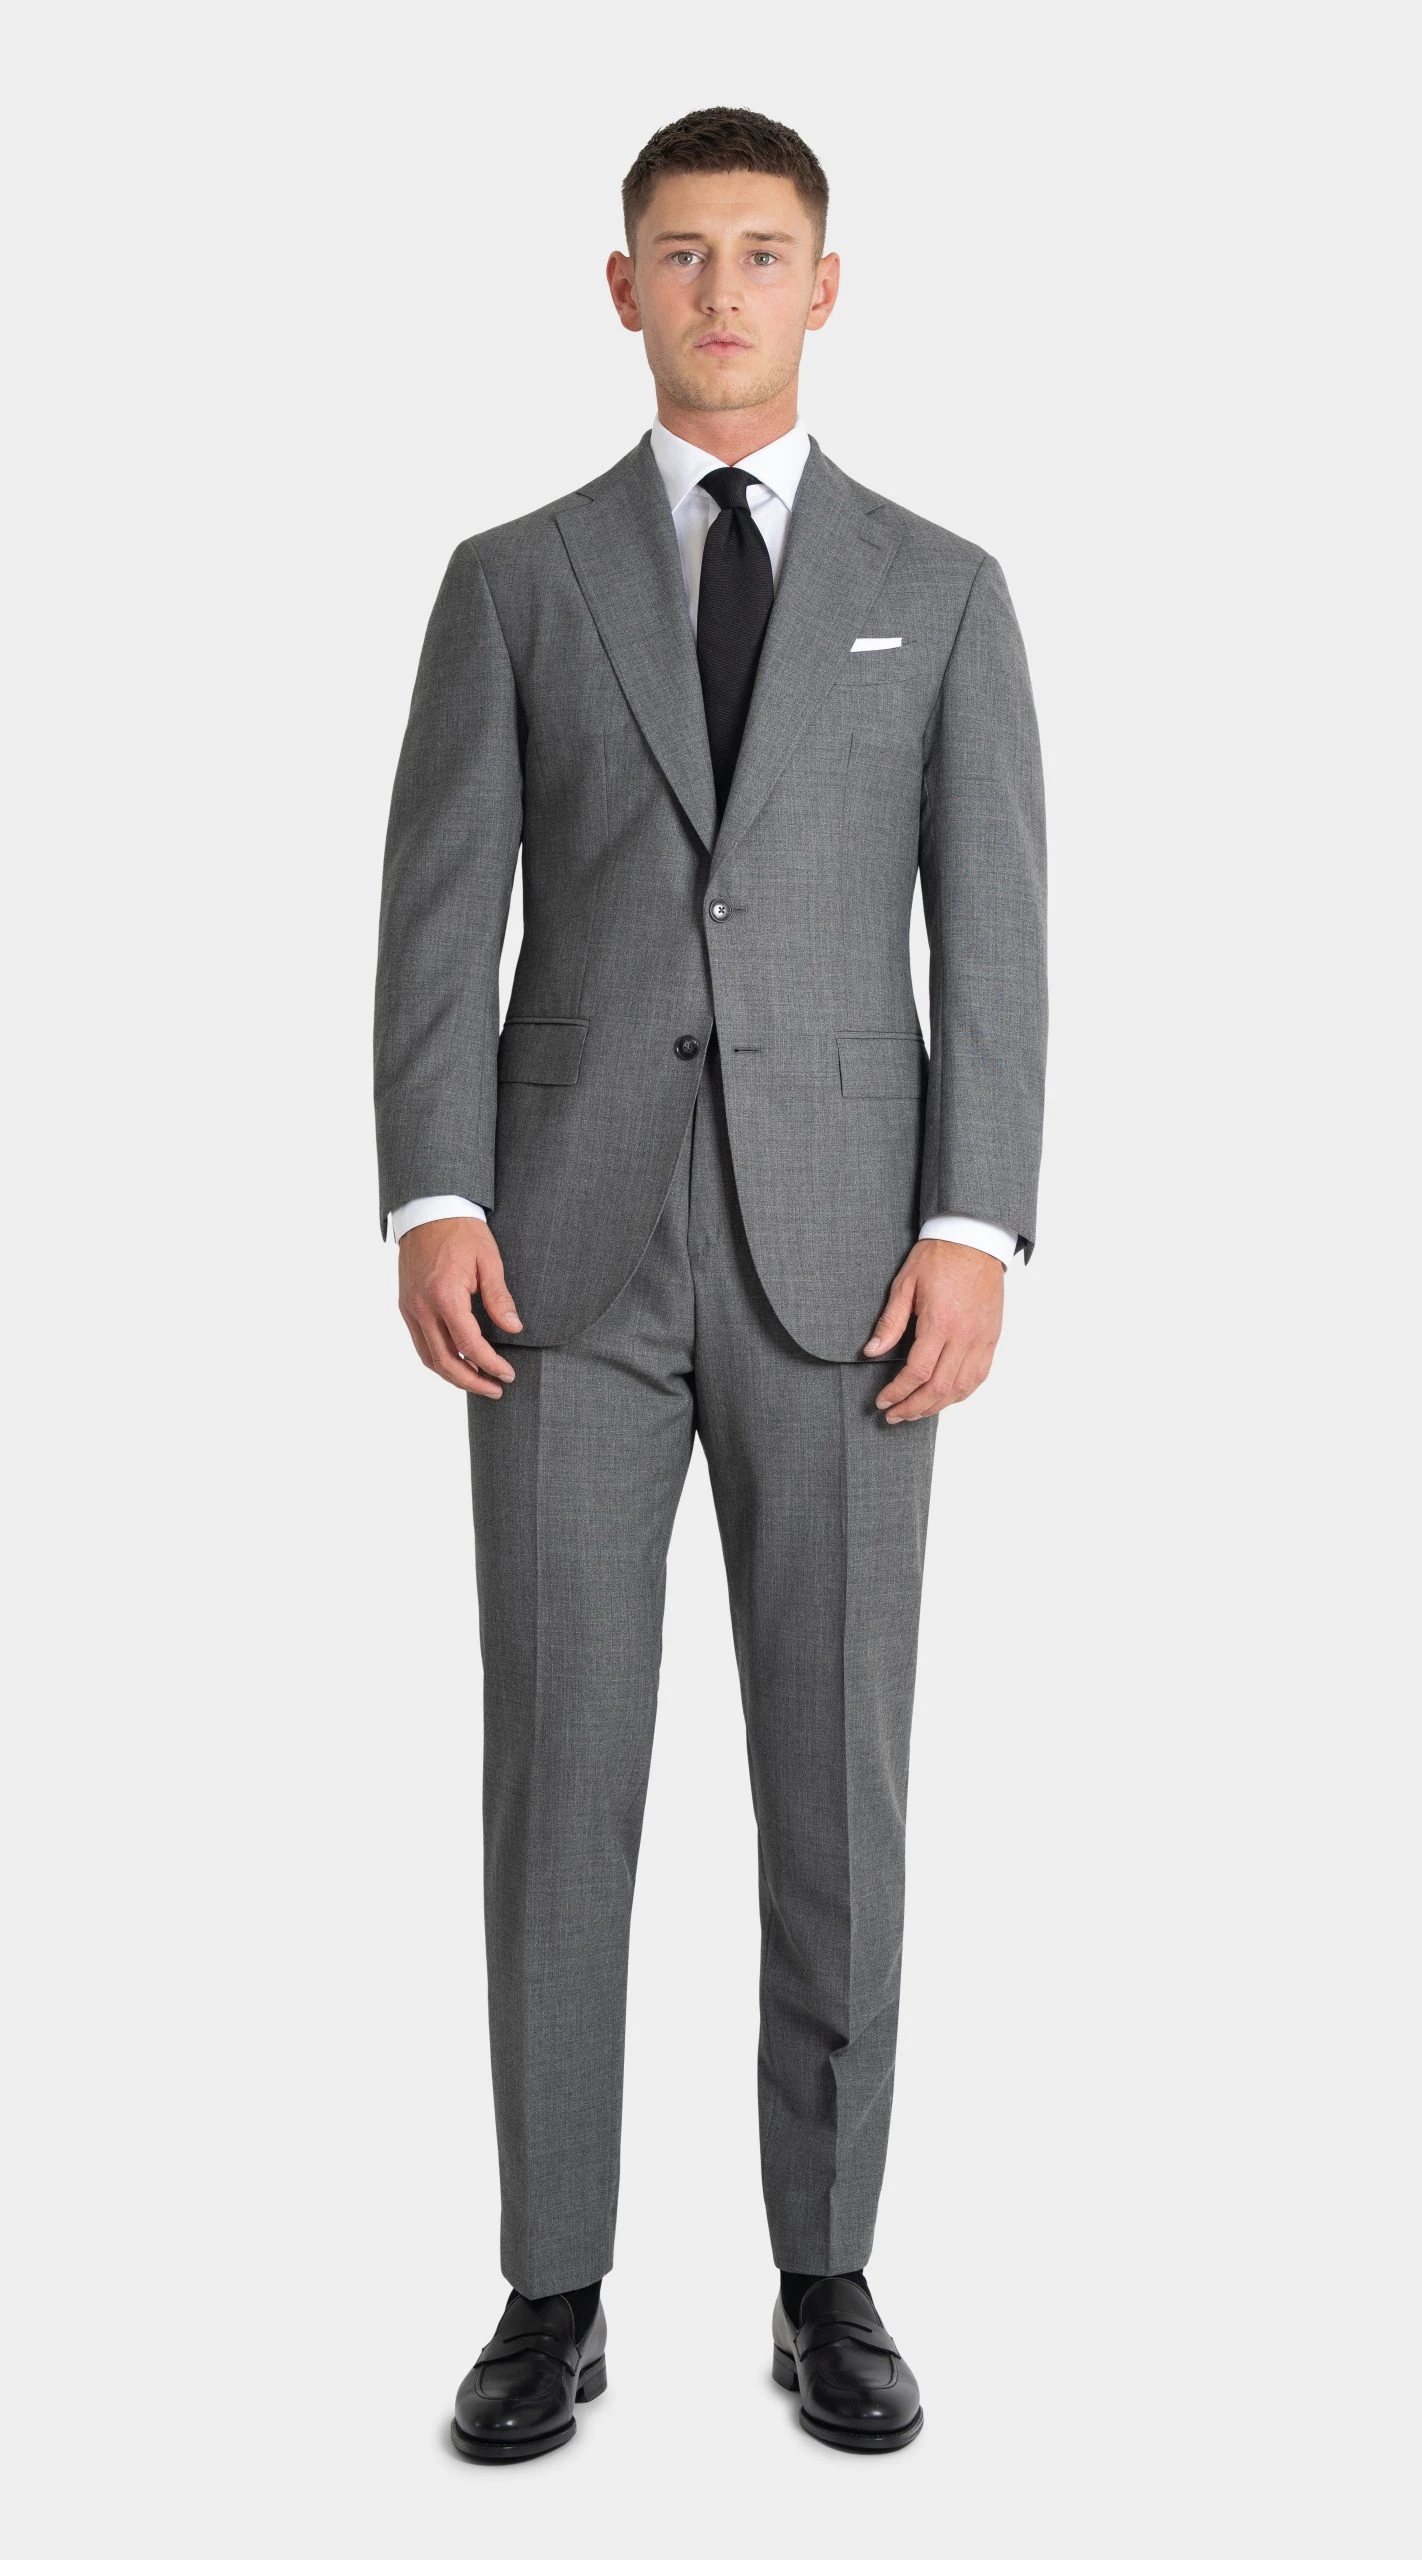 NEW medium grey suit in twistair fabric